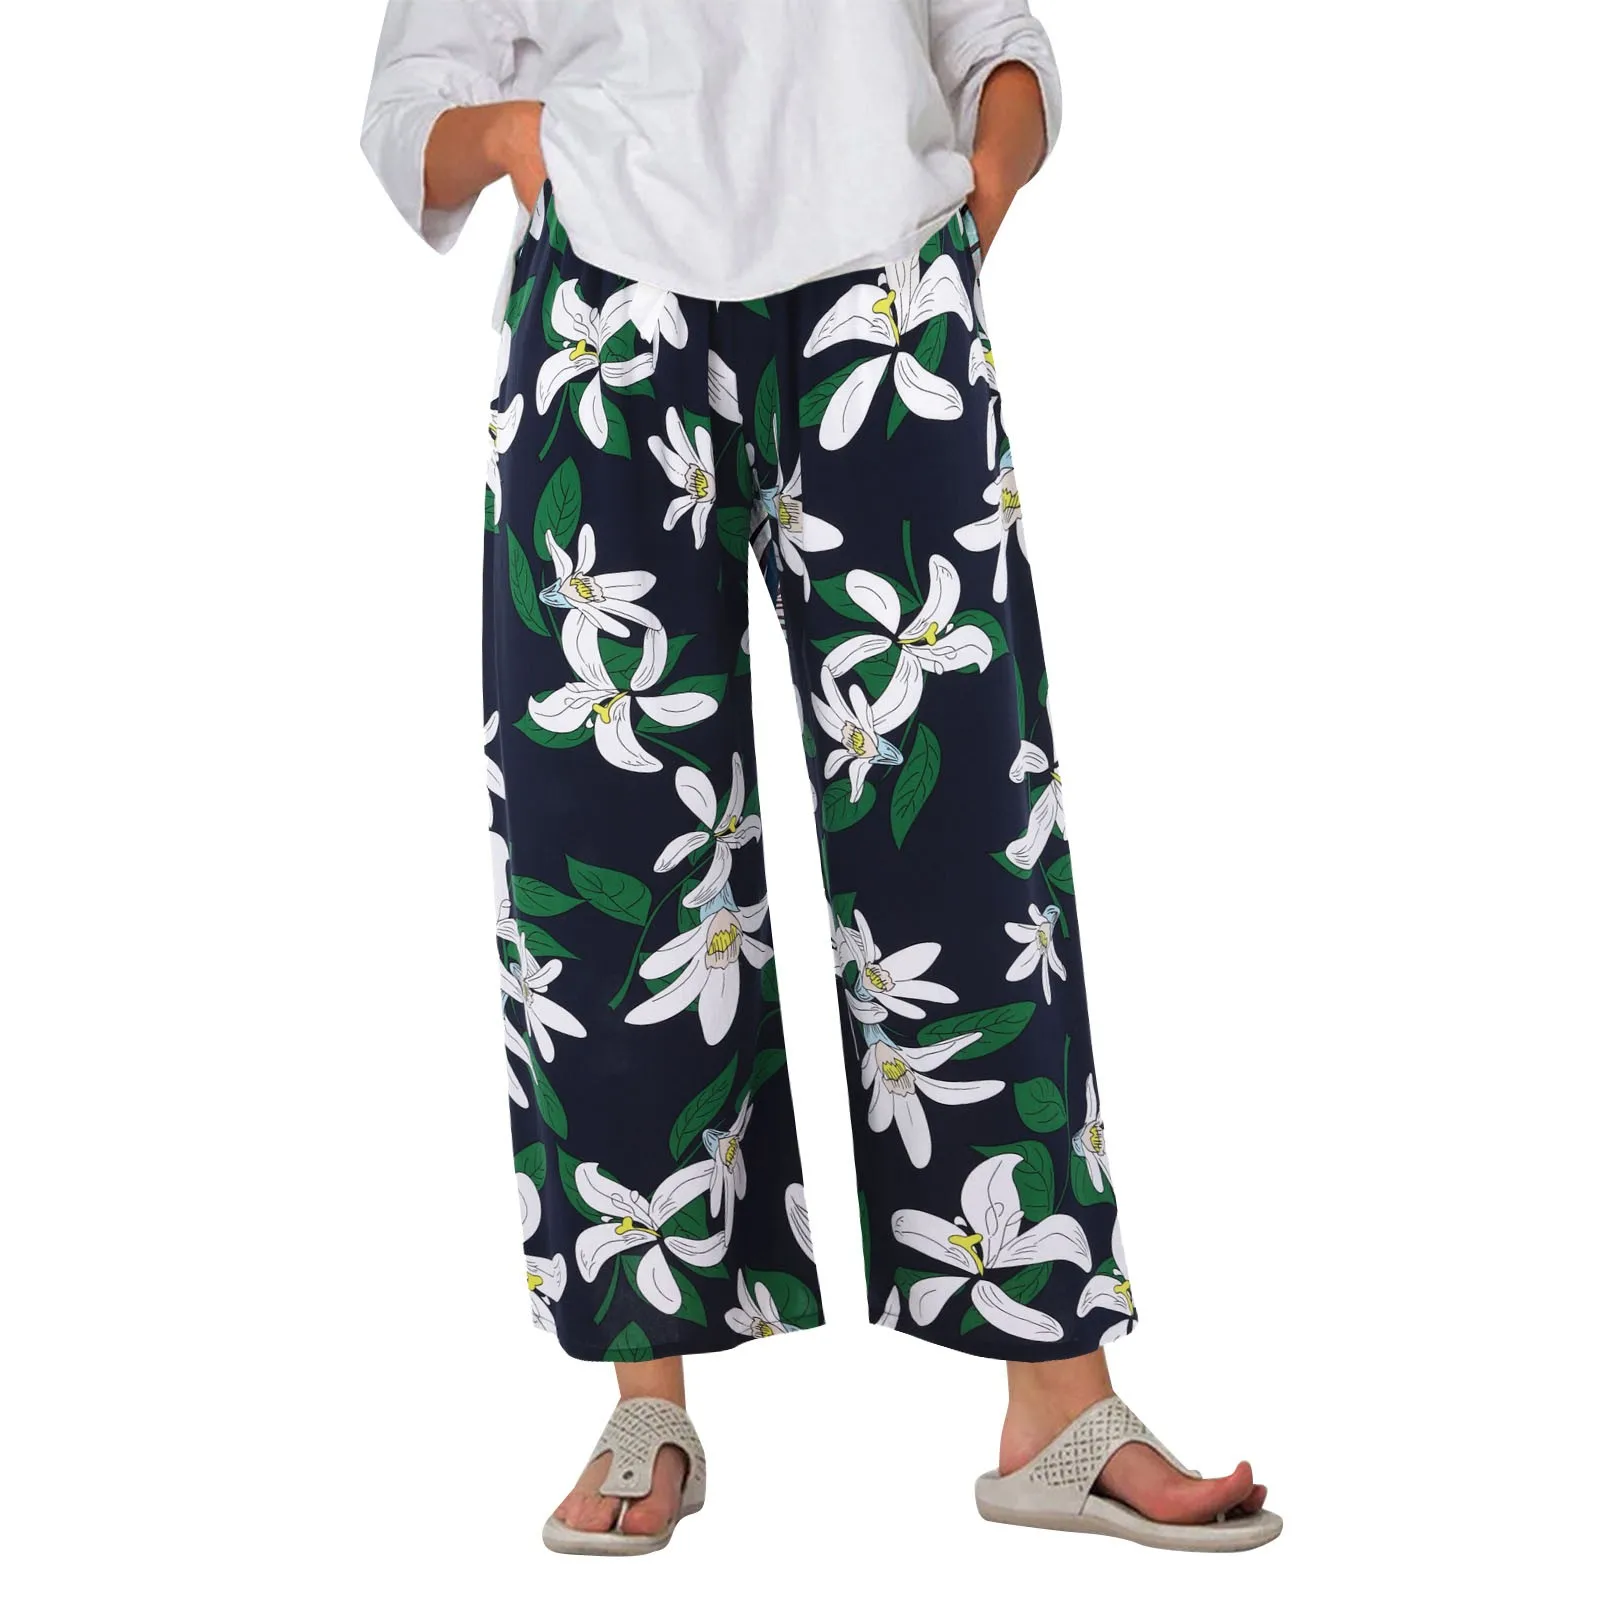 Floral Printed Wide Leg Trousers for Women Summer Casual Loose Comfy Pajama Pants Leisure Elastic High Waist Pocket Harem Pants